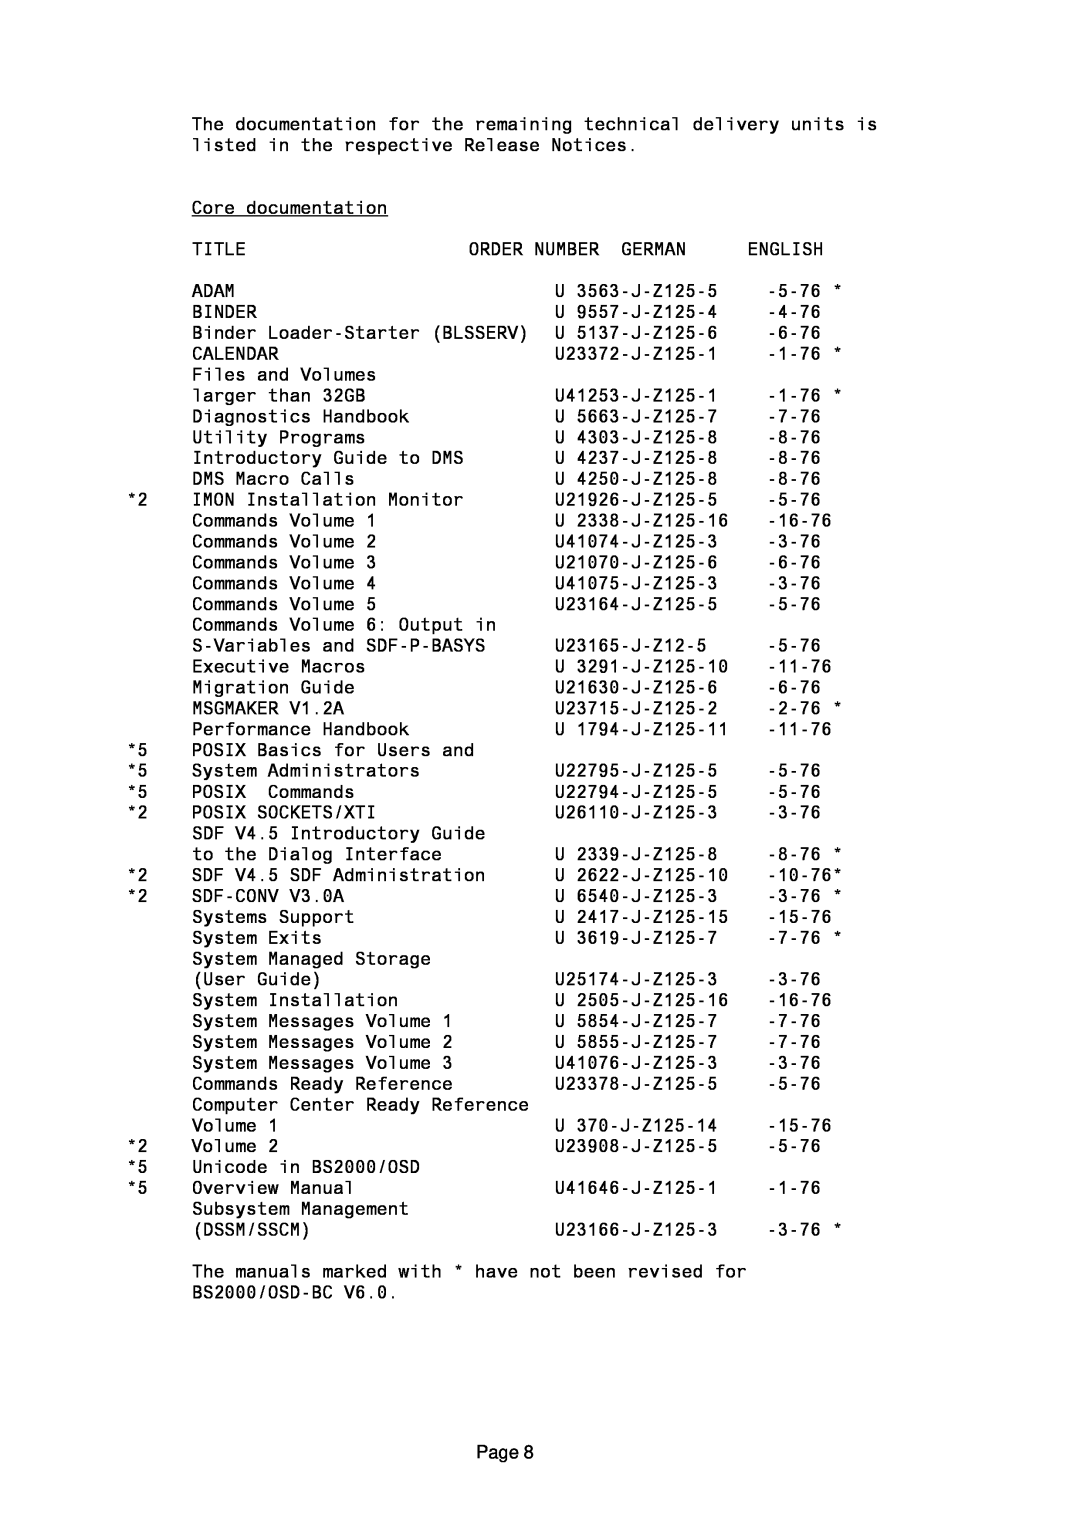 Fujitsu BS2OSD Core documentation, Title, Order Number German, English, Adam, U 3563-J-Z125-5, 5-76, Binder, 4-76, 6-76 